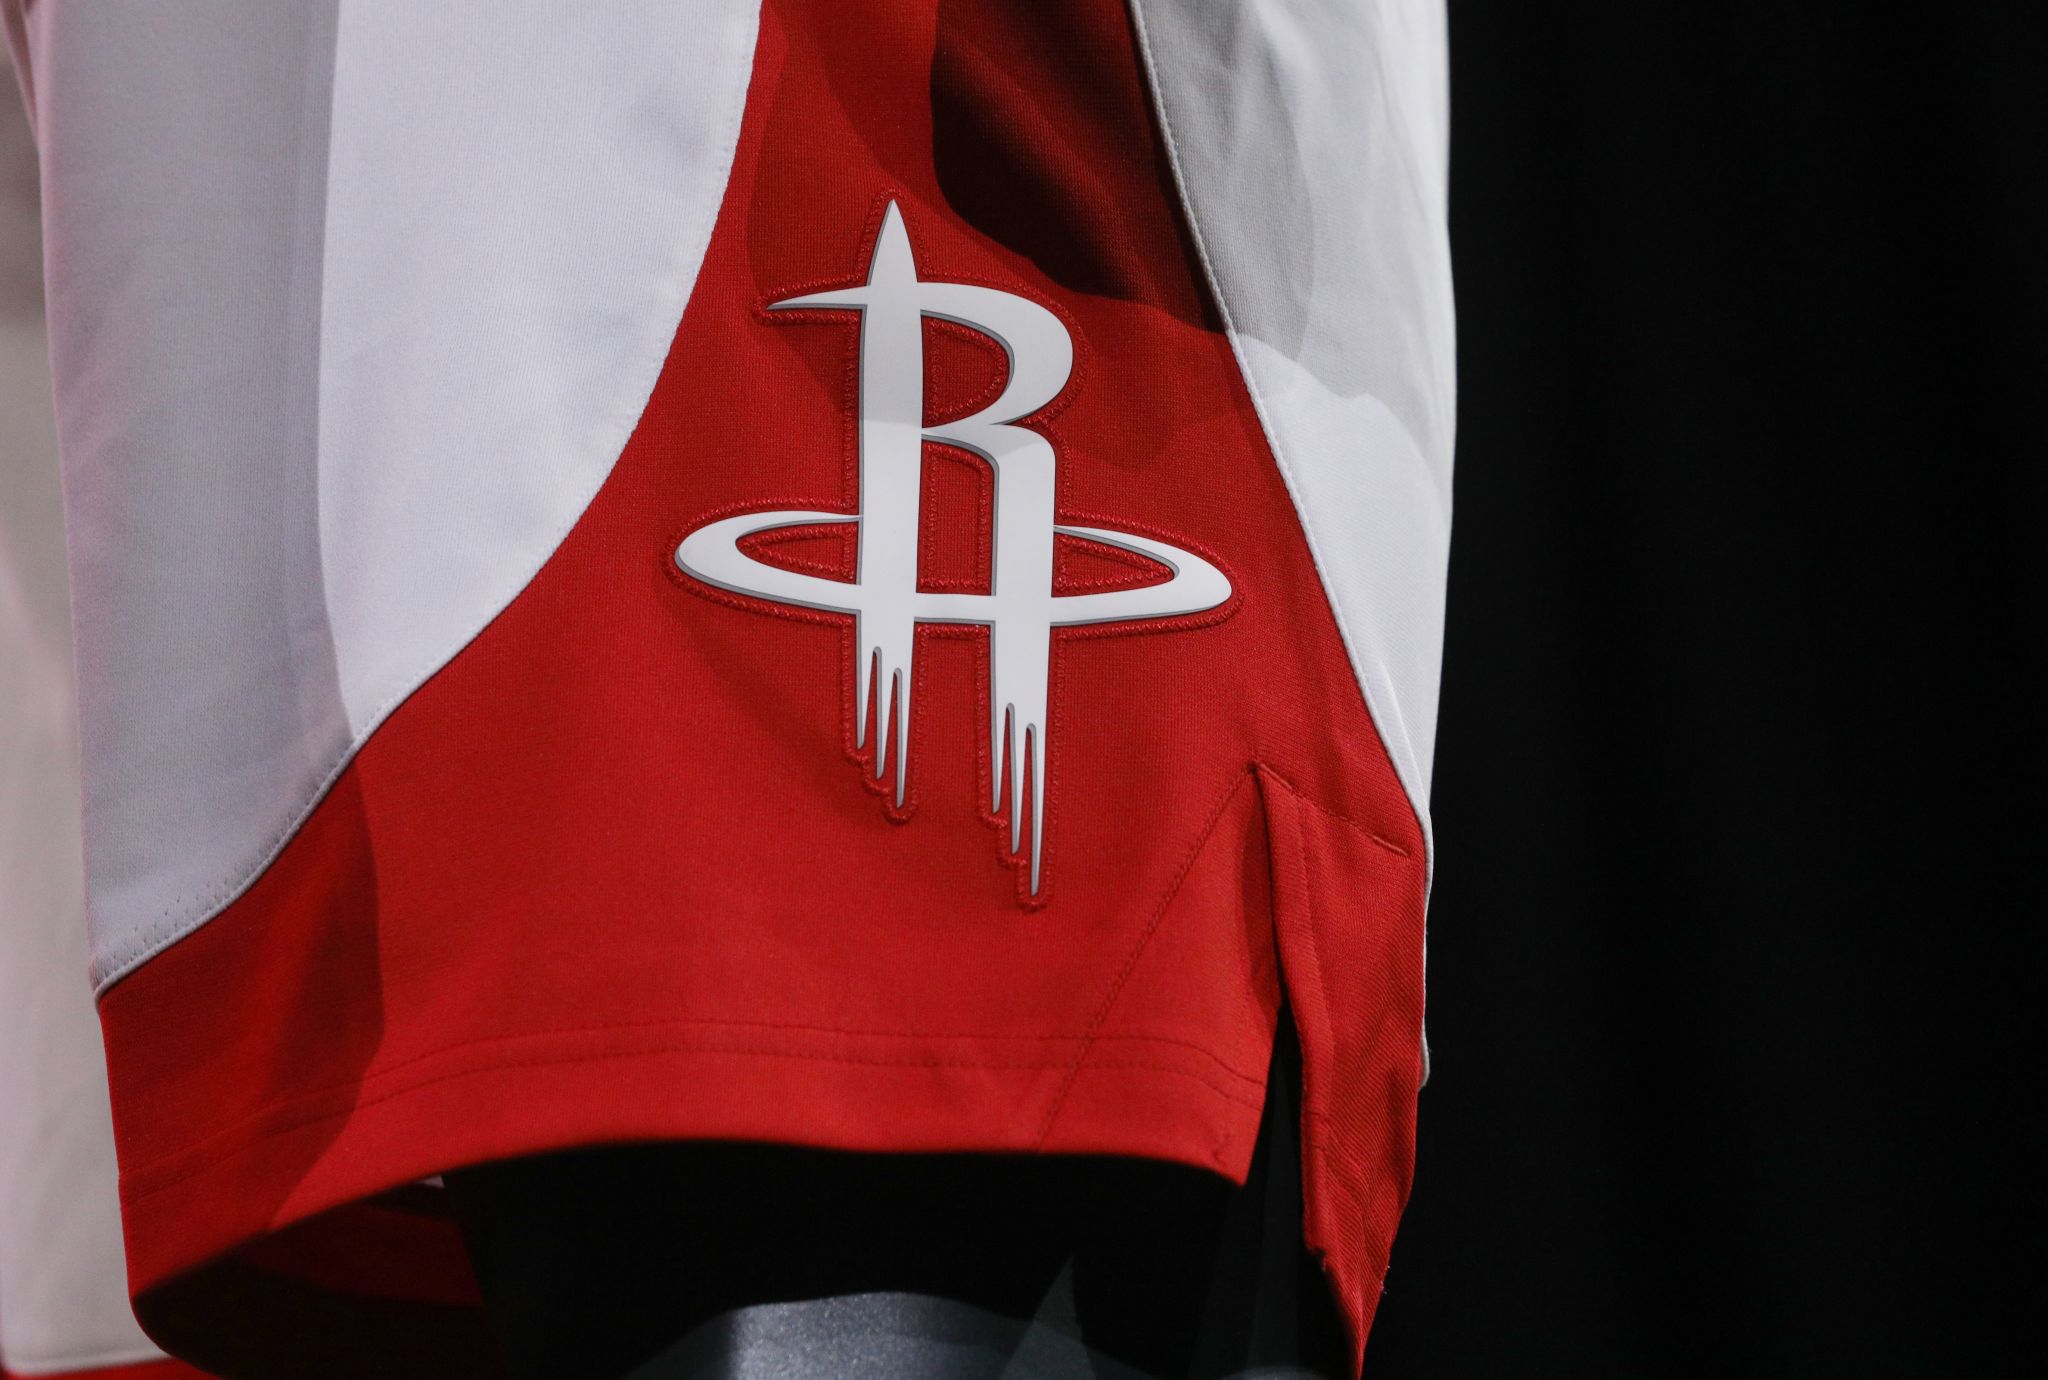 NBA Buzz - Houston Rockets “City Edition” uniforms have